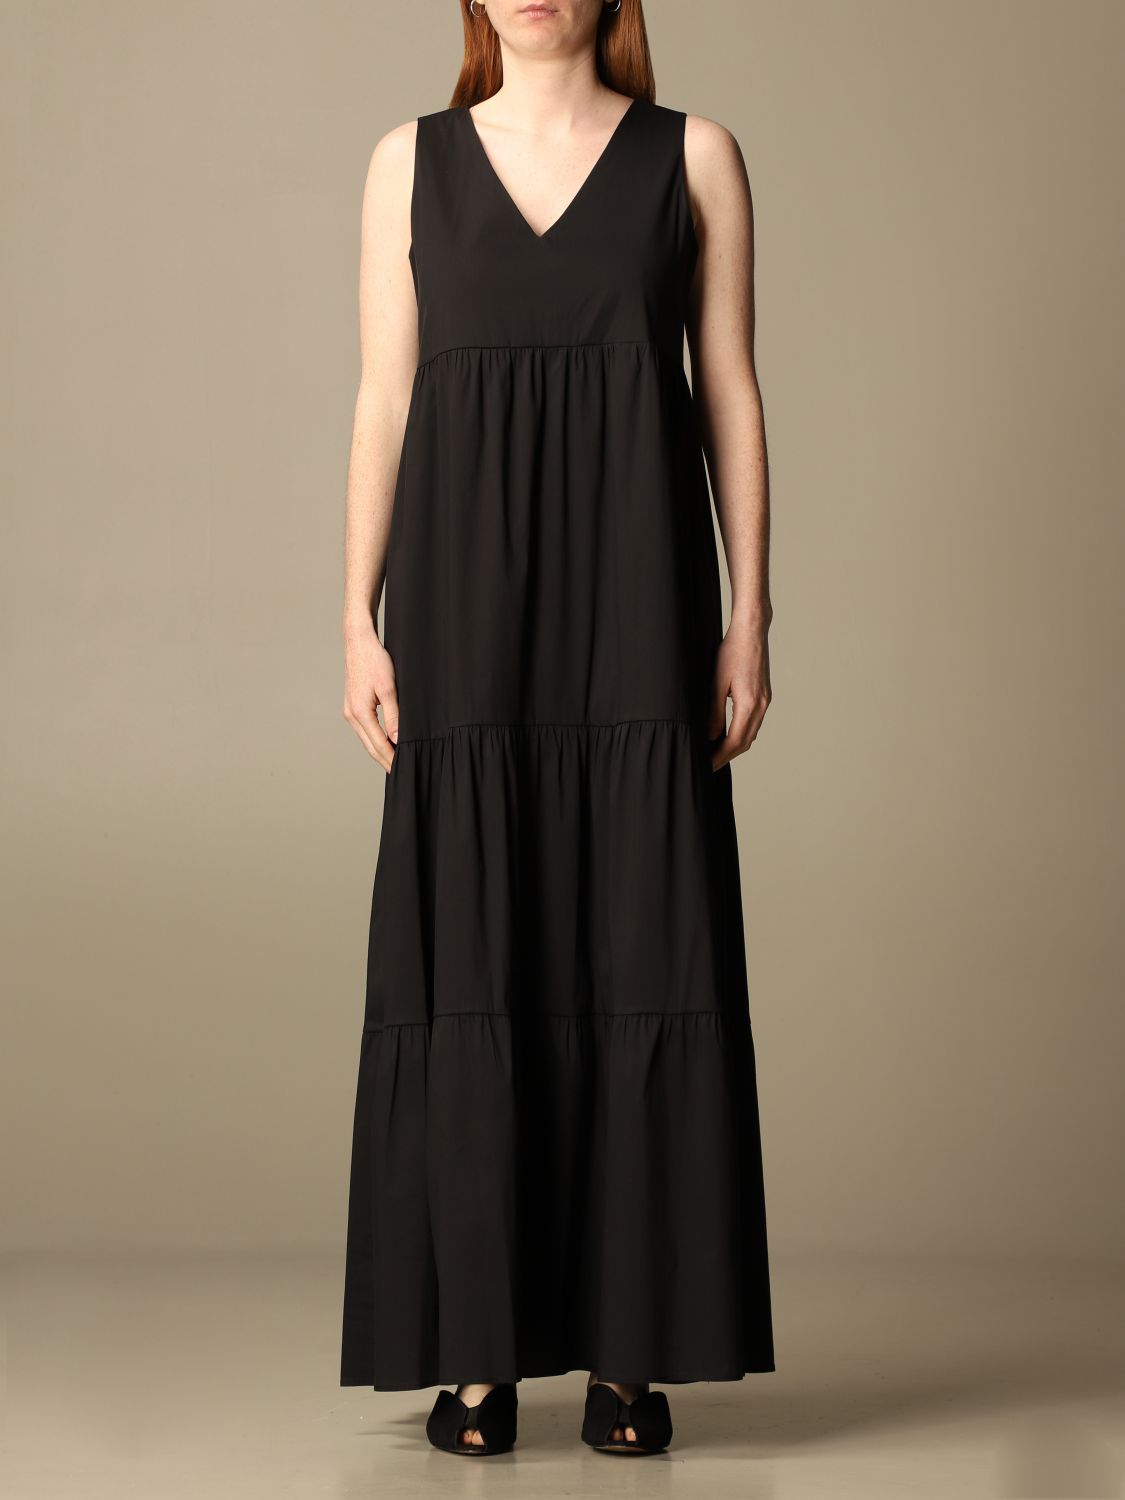 KAOS: dress for woman - Black | Kaos dress NPJTZ020 online on GIGLIO.COM